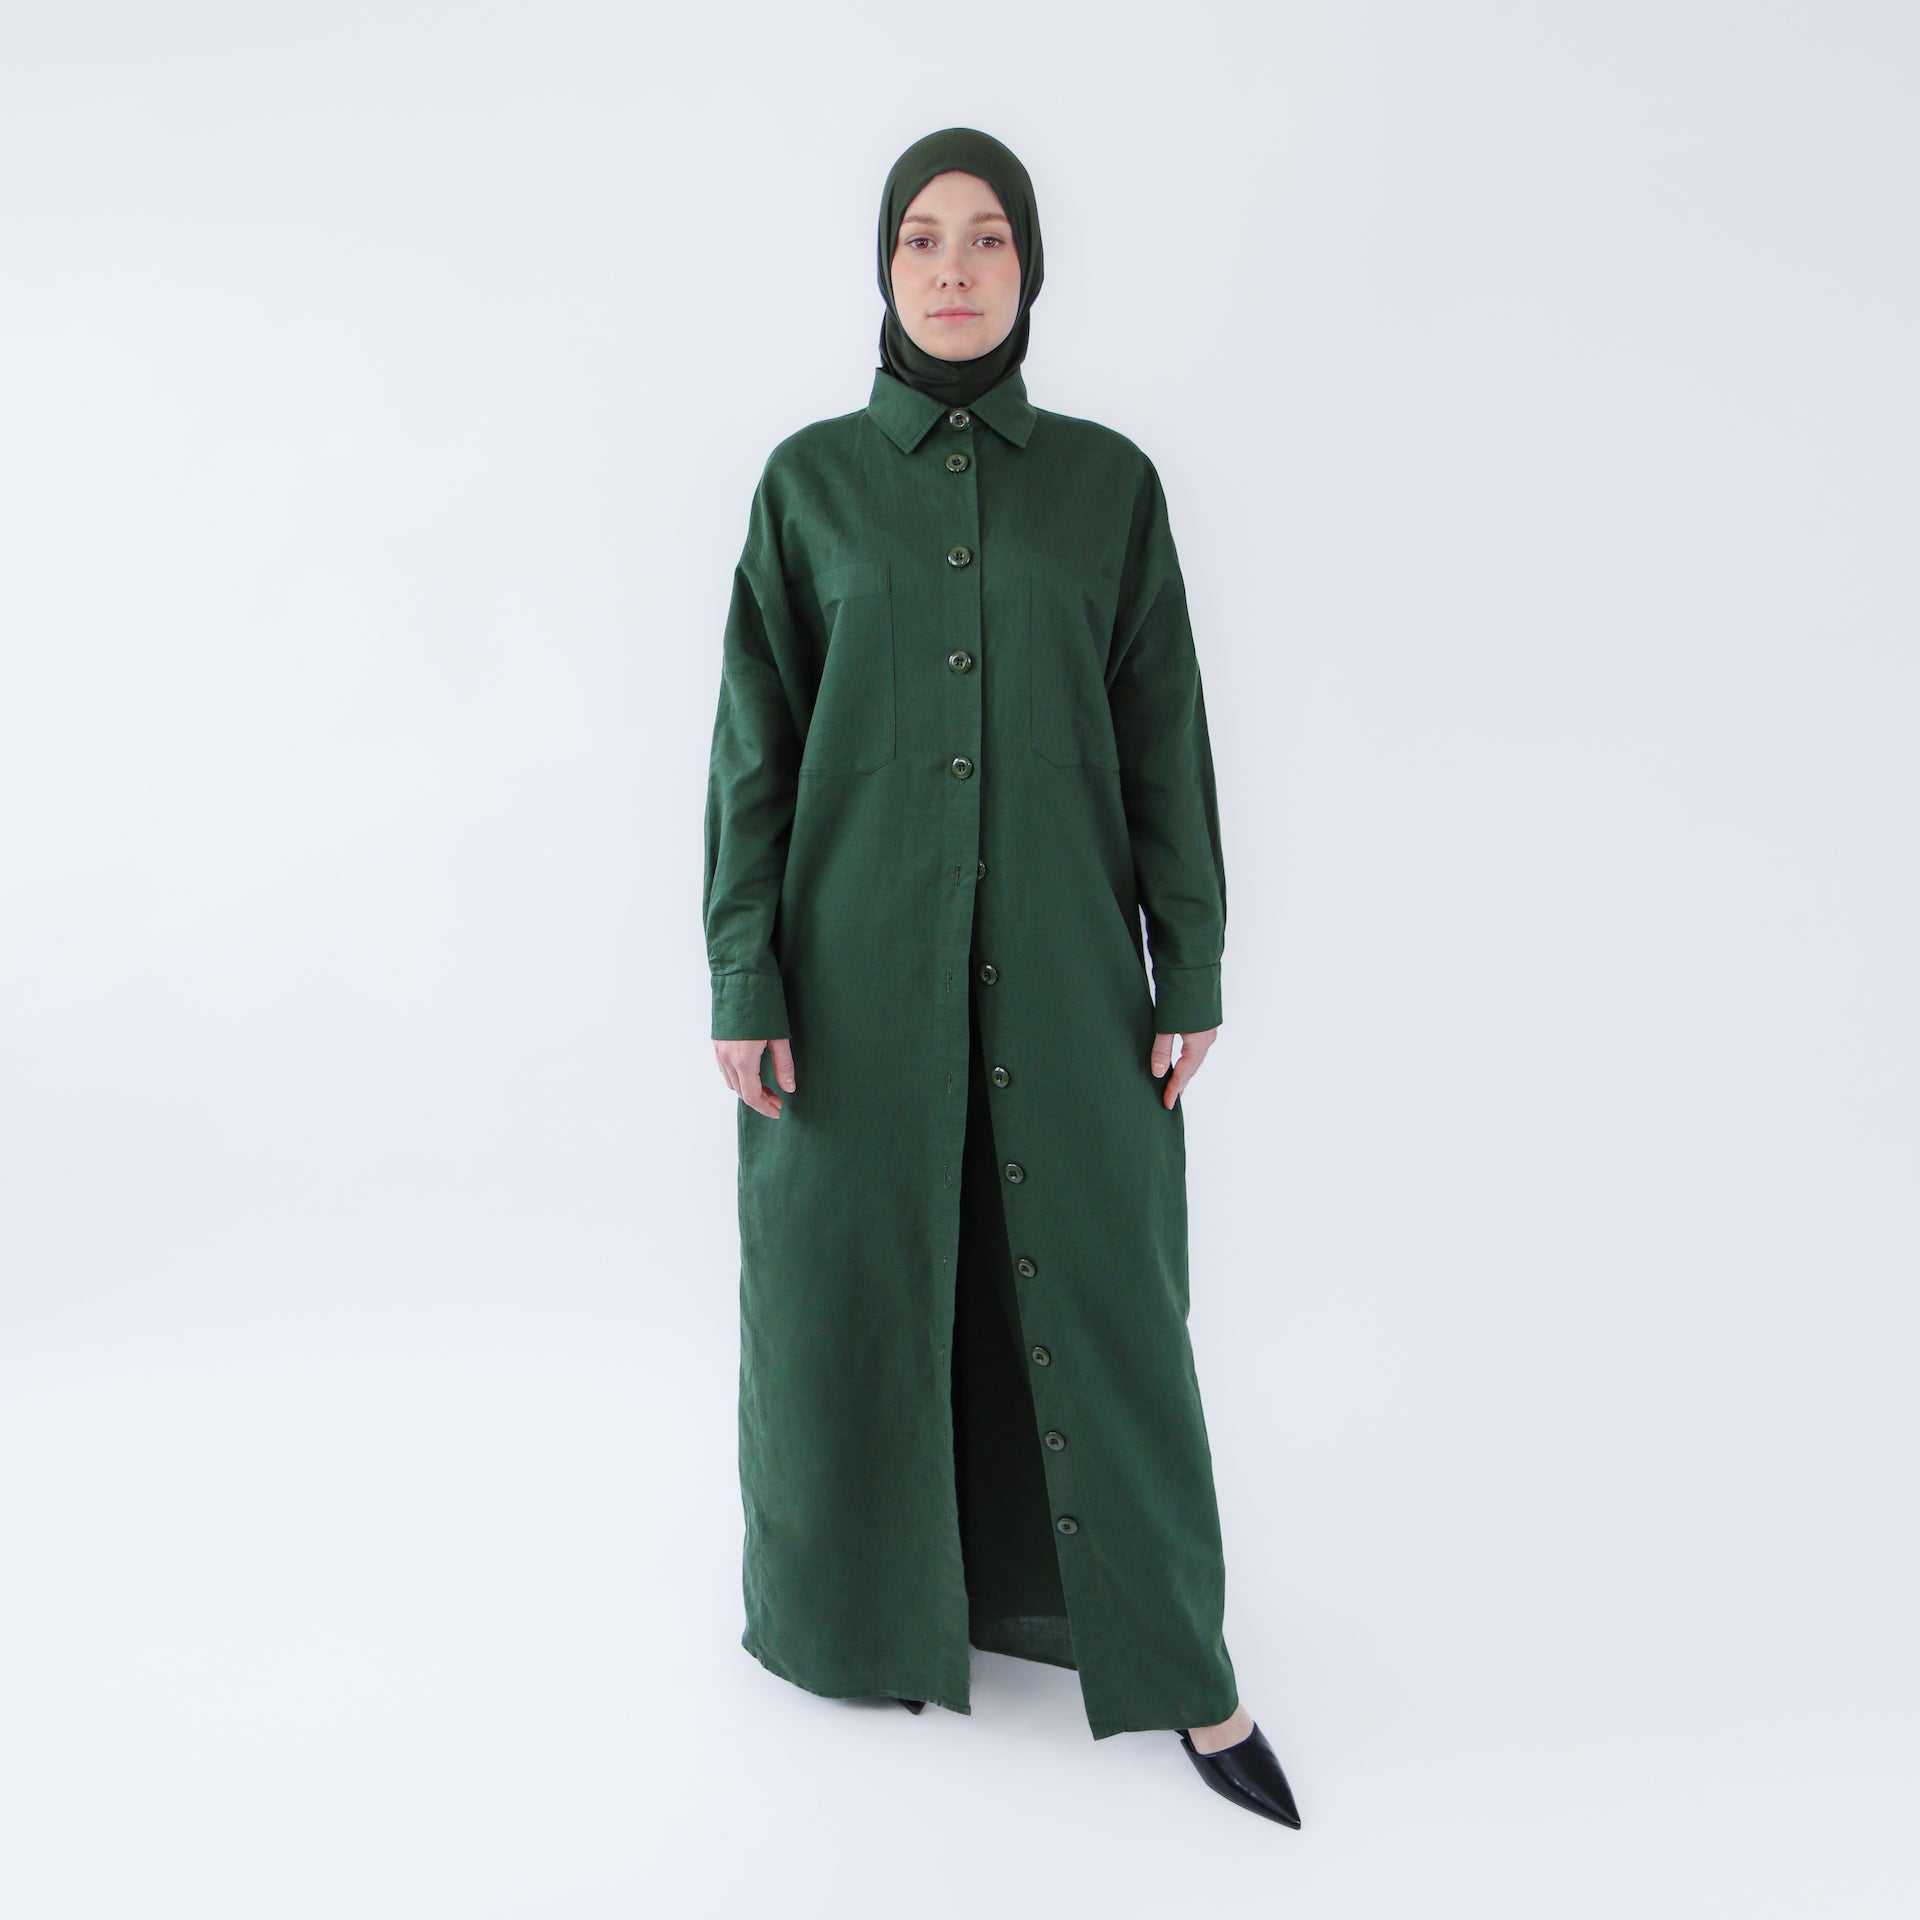 Abaya dress style maxi dress for women with wide trousers "Khaki Linen"